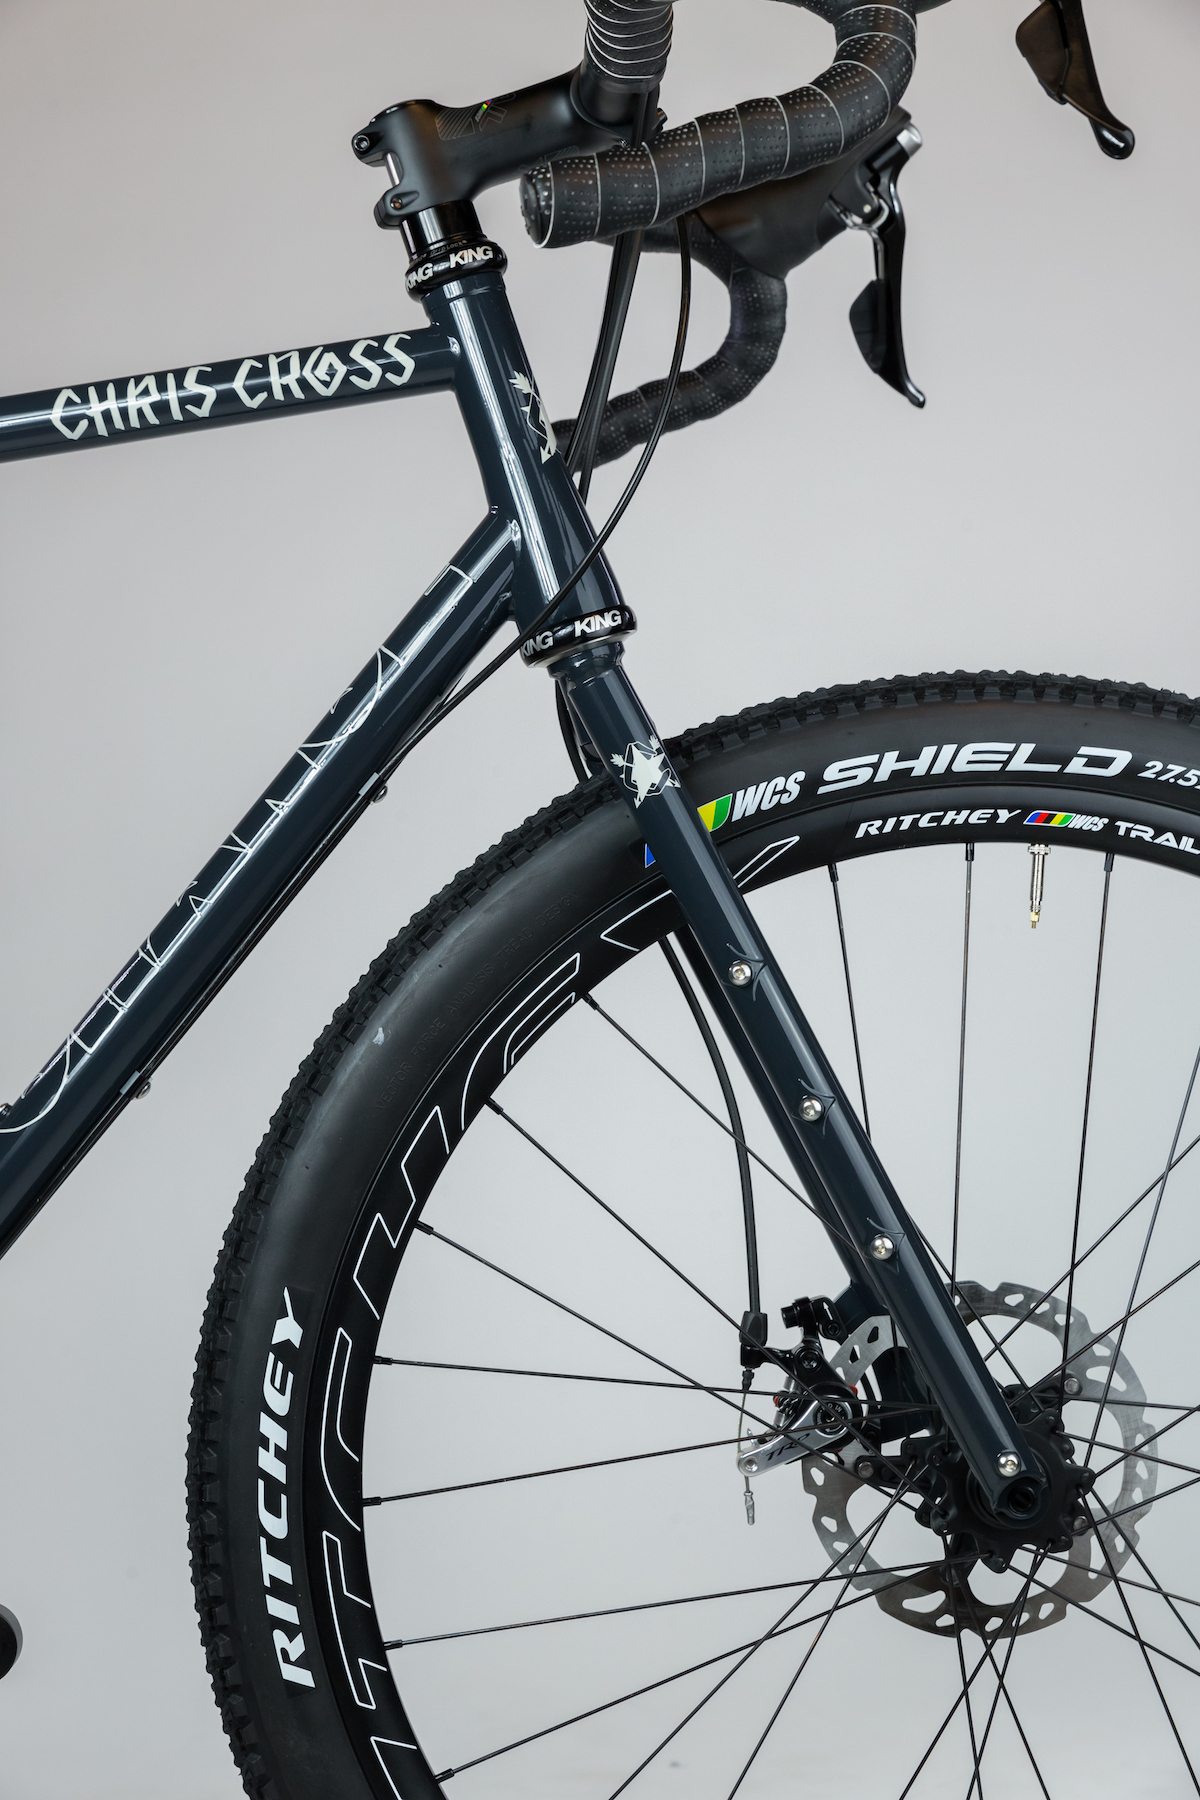 fat chance chris cross cyclocross bike steel 